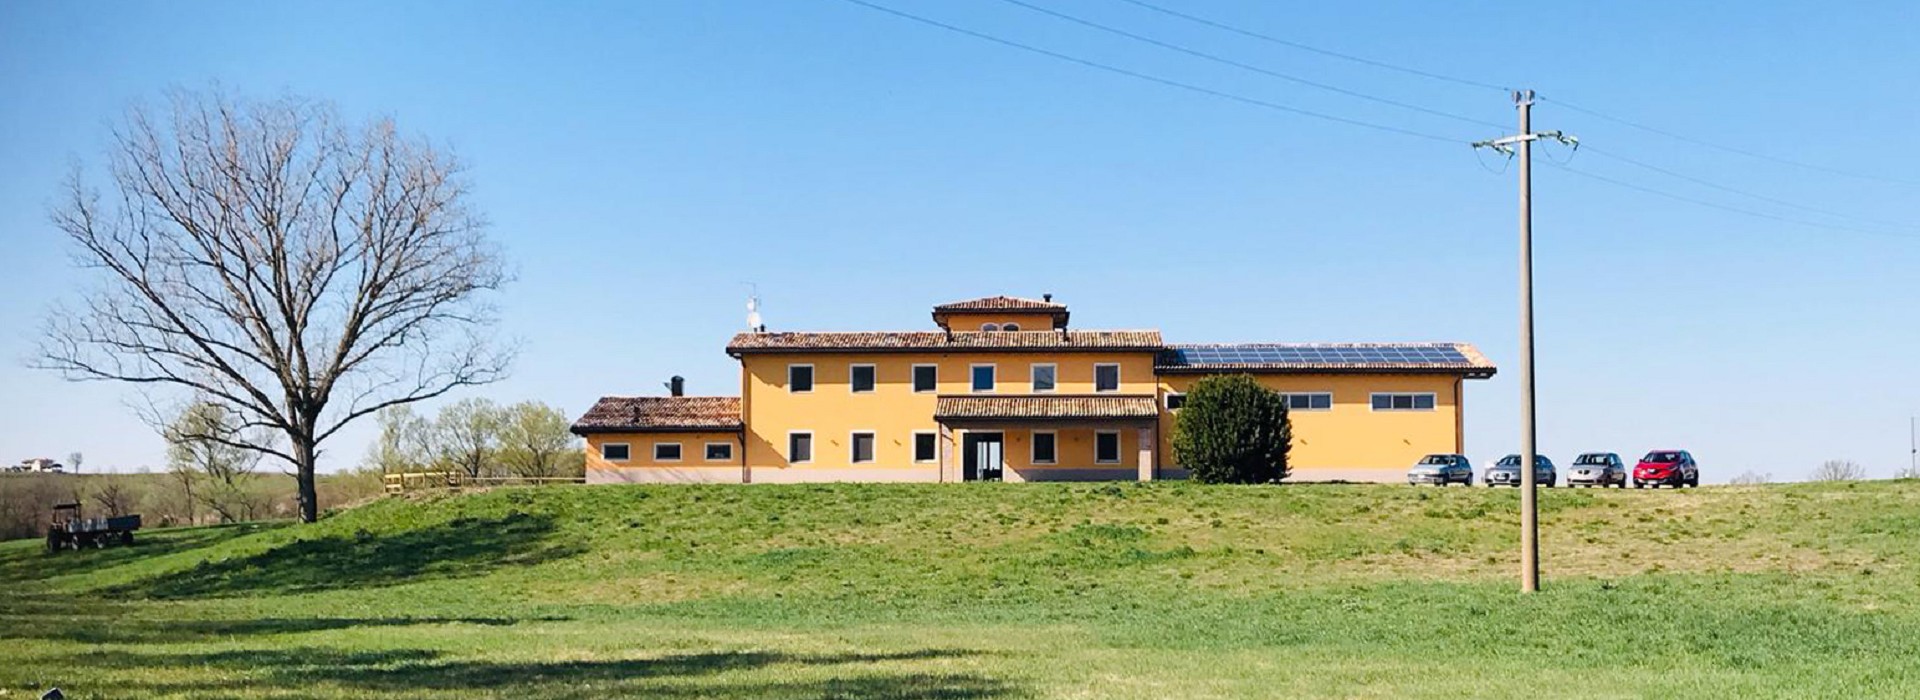 Farmhouse and Winery in Italy | Bonarda Wine Italy Frizzante |  Wineries in Emilia Romagna Italy